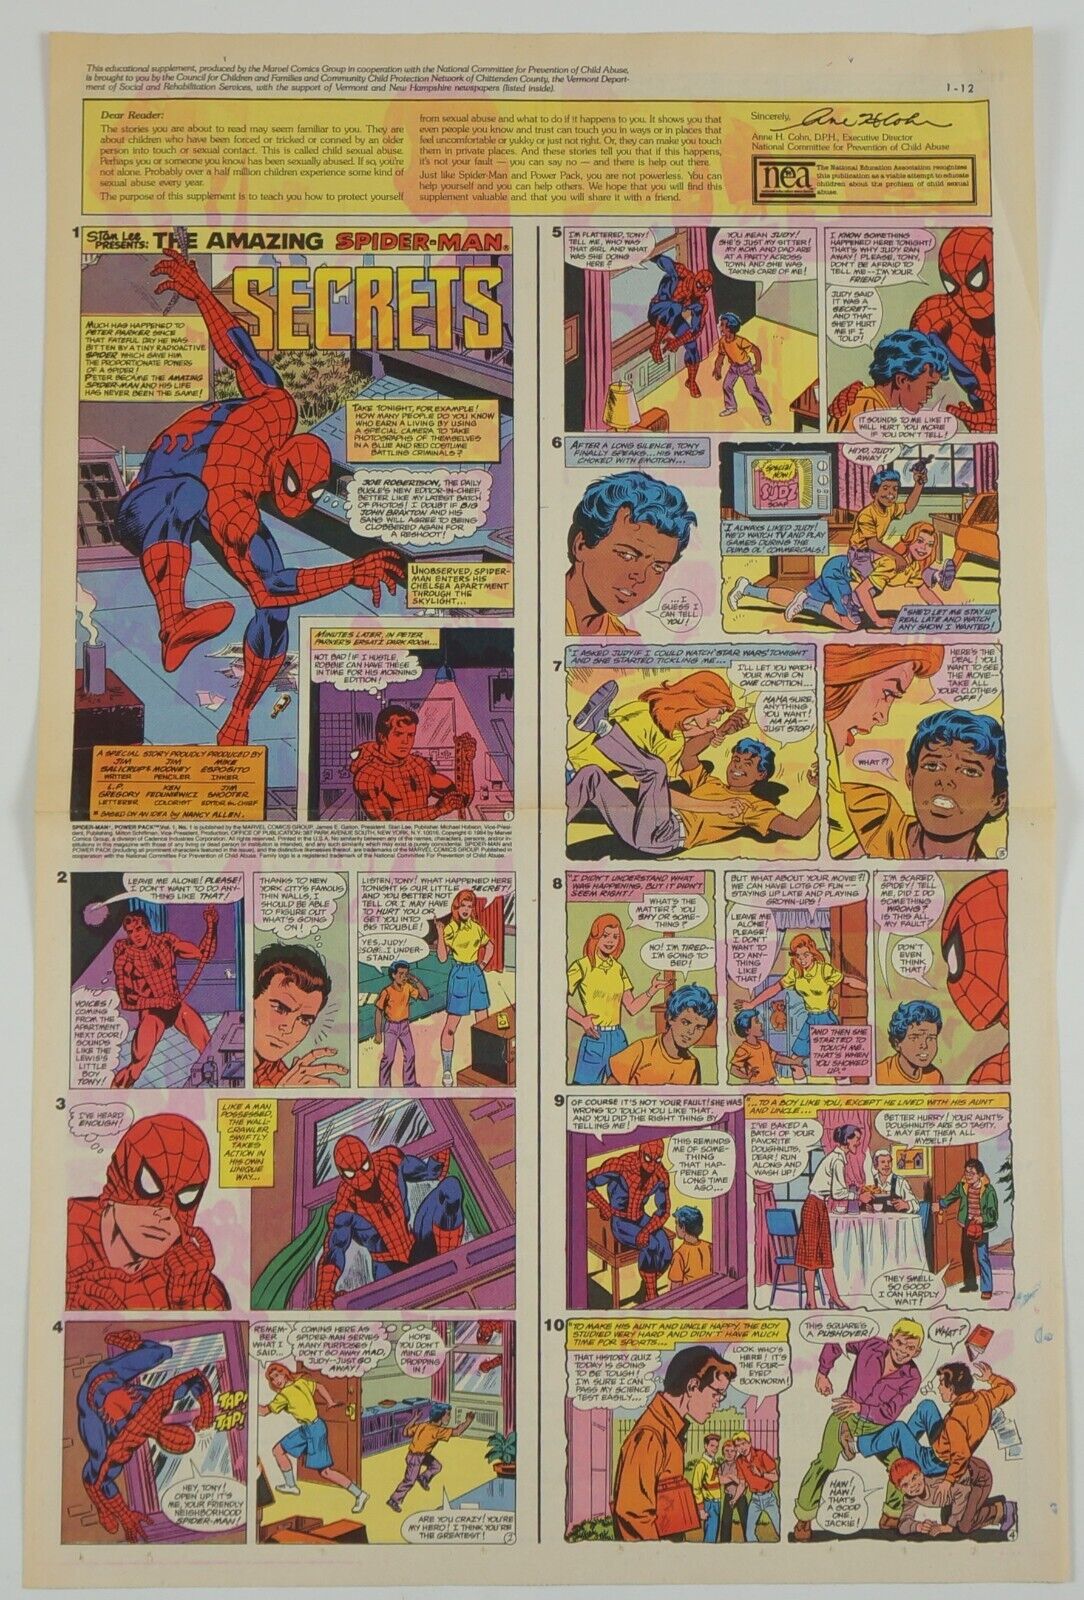 Spider-Man & Power Pack: Child Abuse Prevention newspaper promo Marvel NCPCA NEA